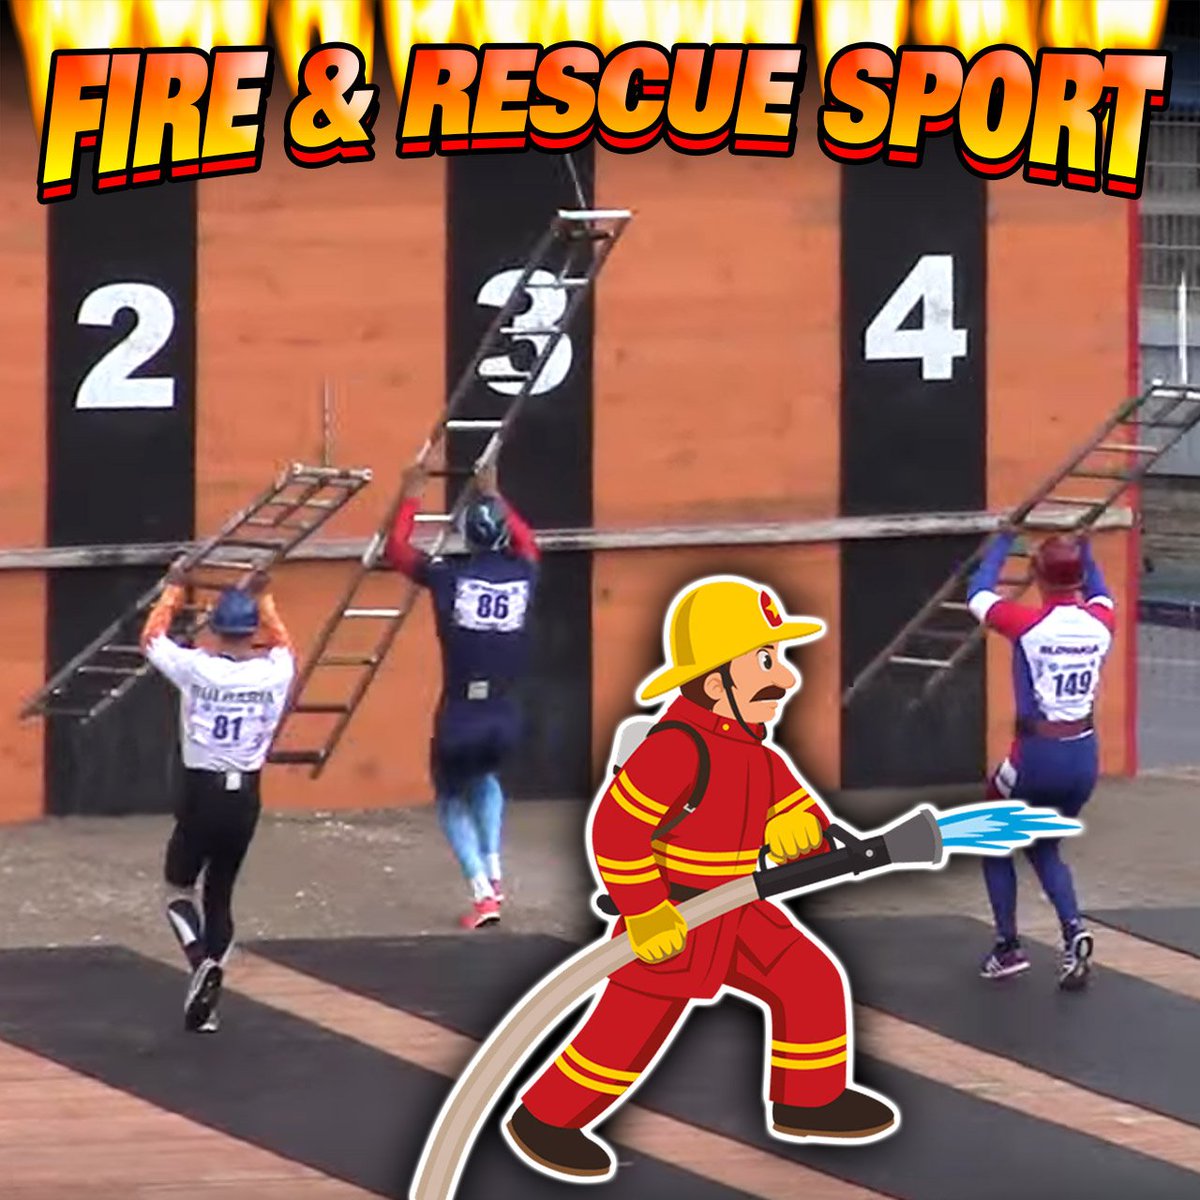 Fire Sport: Firefighter challenge includes ludicrous ladder climbing, Herculean hose pulling via @starrcards starrcards.com/fire-sport-fir… #BelieveItOrNot 🔥 #fire #firefighter #championship #FireSport #ObstacleRace